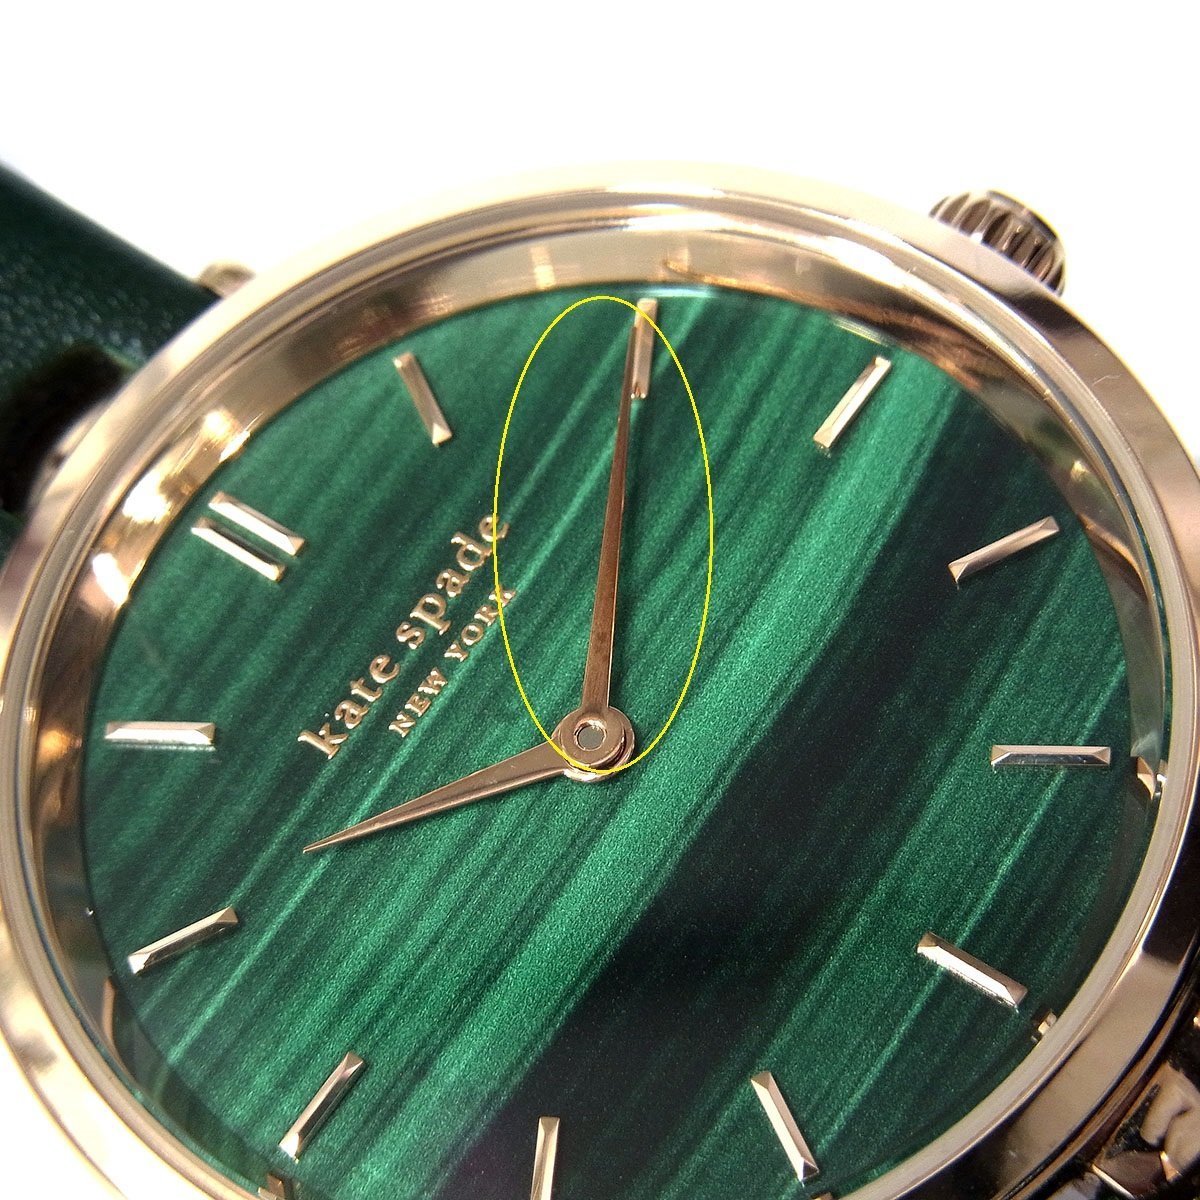  Kate * Spade HOLLAND KSW1529 lady's wristwatch quartz green face green operation goods kate spade NEW YORK =